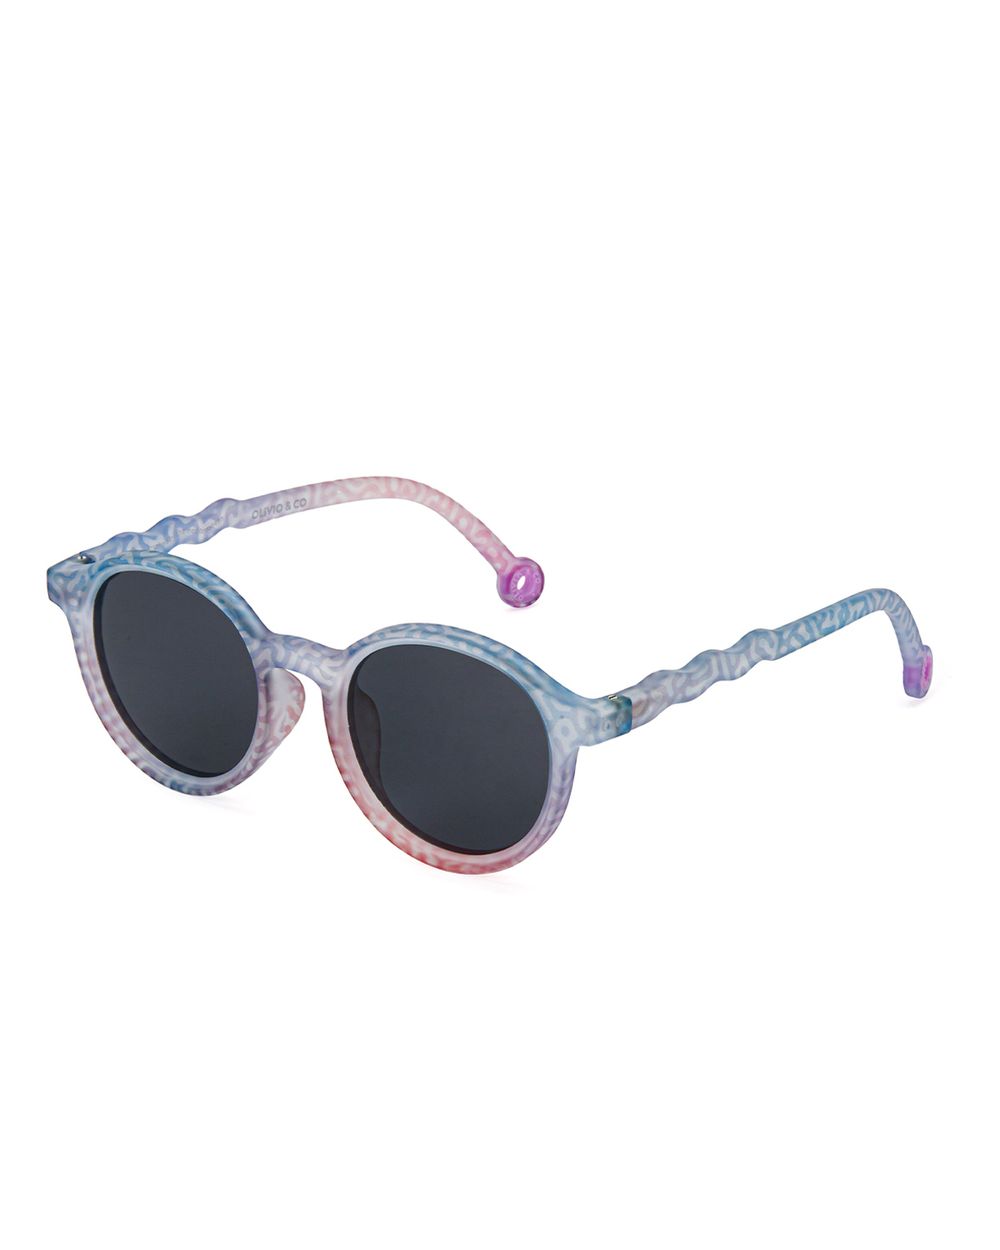 Kids Oval Sunglasses Coral Fantasy